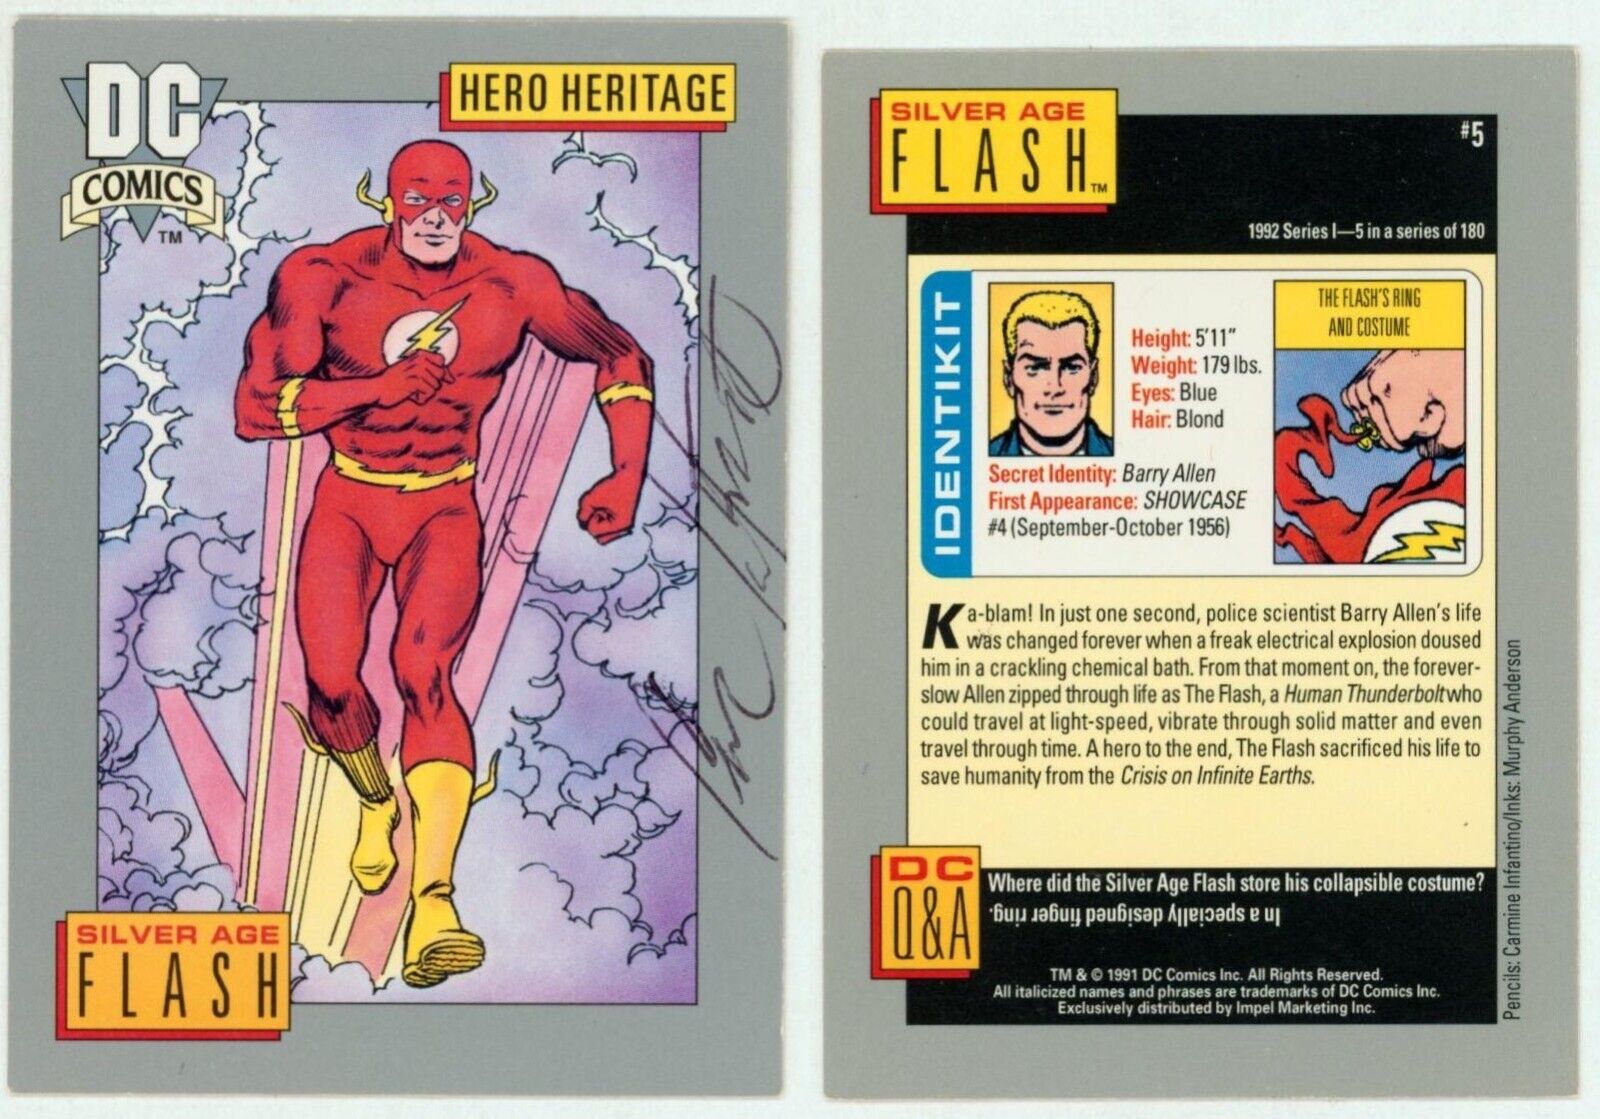 Carmine Infantino SIGNED 1991 DC Comics Art Card Silver Age Flash Barry Allen CW